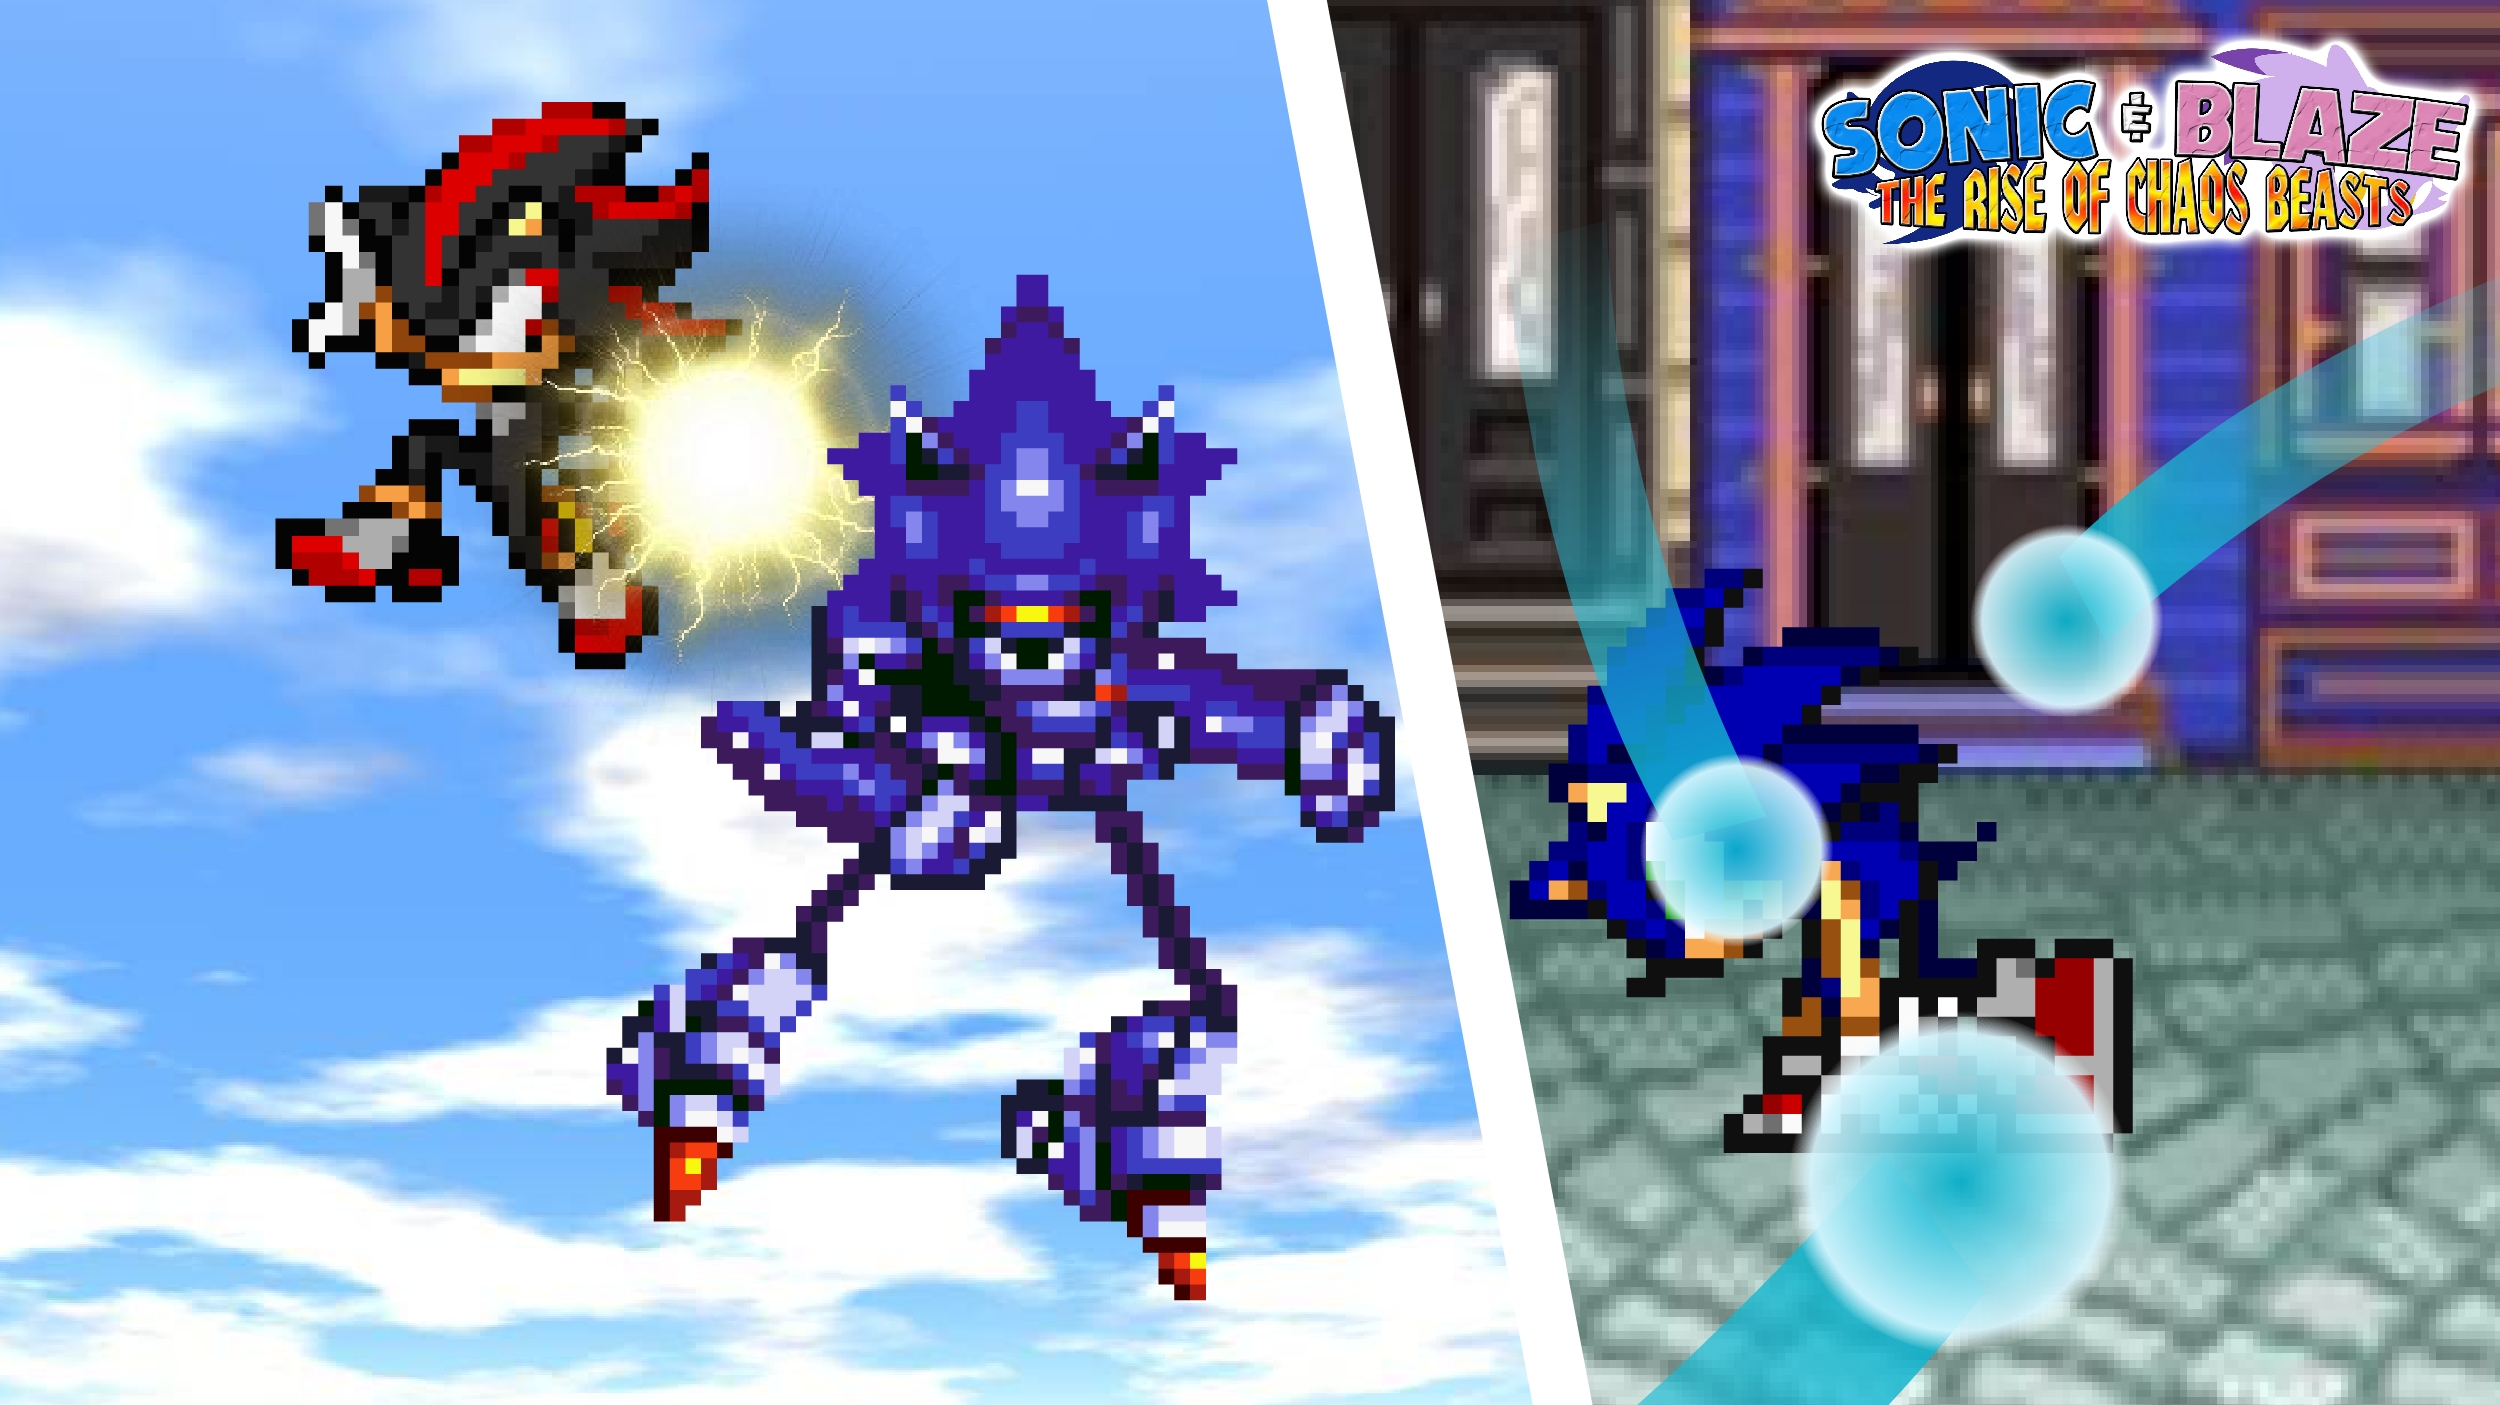 Sonic revenge. Sonic vs Mecha Sonic. Супер Соник месть работника. Dark Sonic vs super Mecha Shadow. Turbo Mecha Sonic vs.